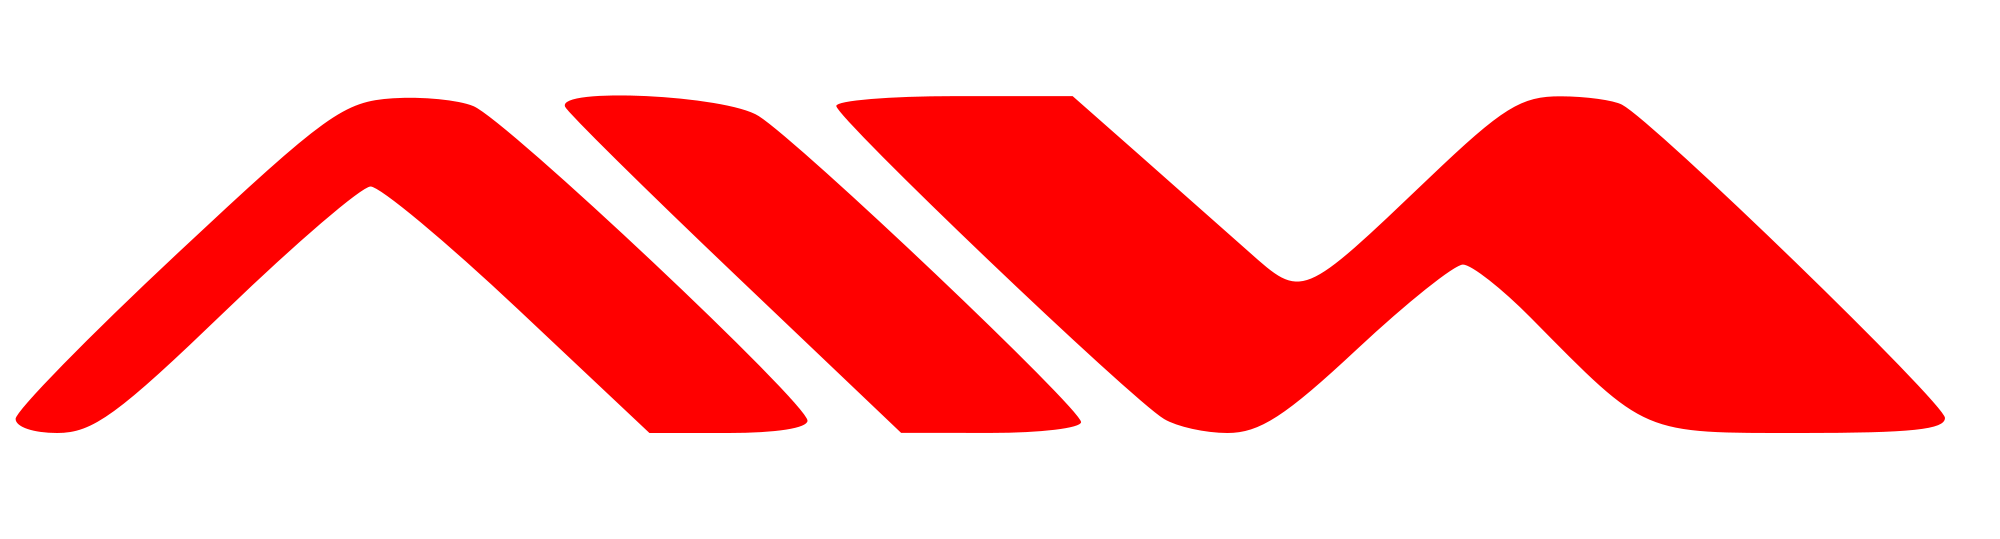 Red Electronic Logo - Aiwa Logo PNG Transparent Aiwa Logo.PNG Images. | PlusPNG